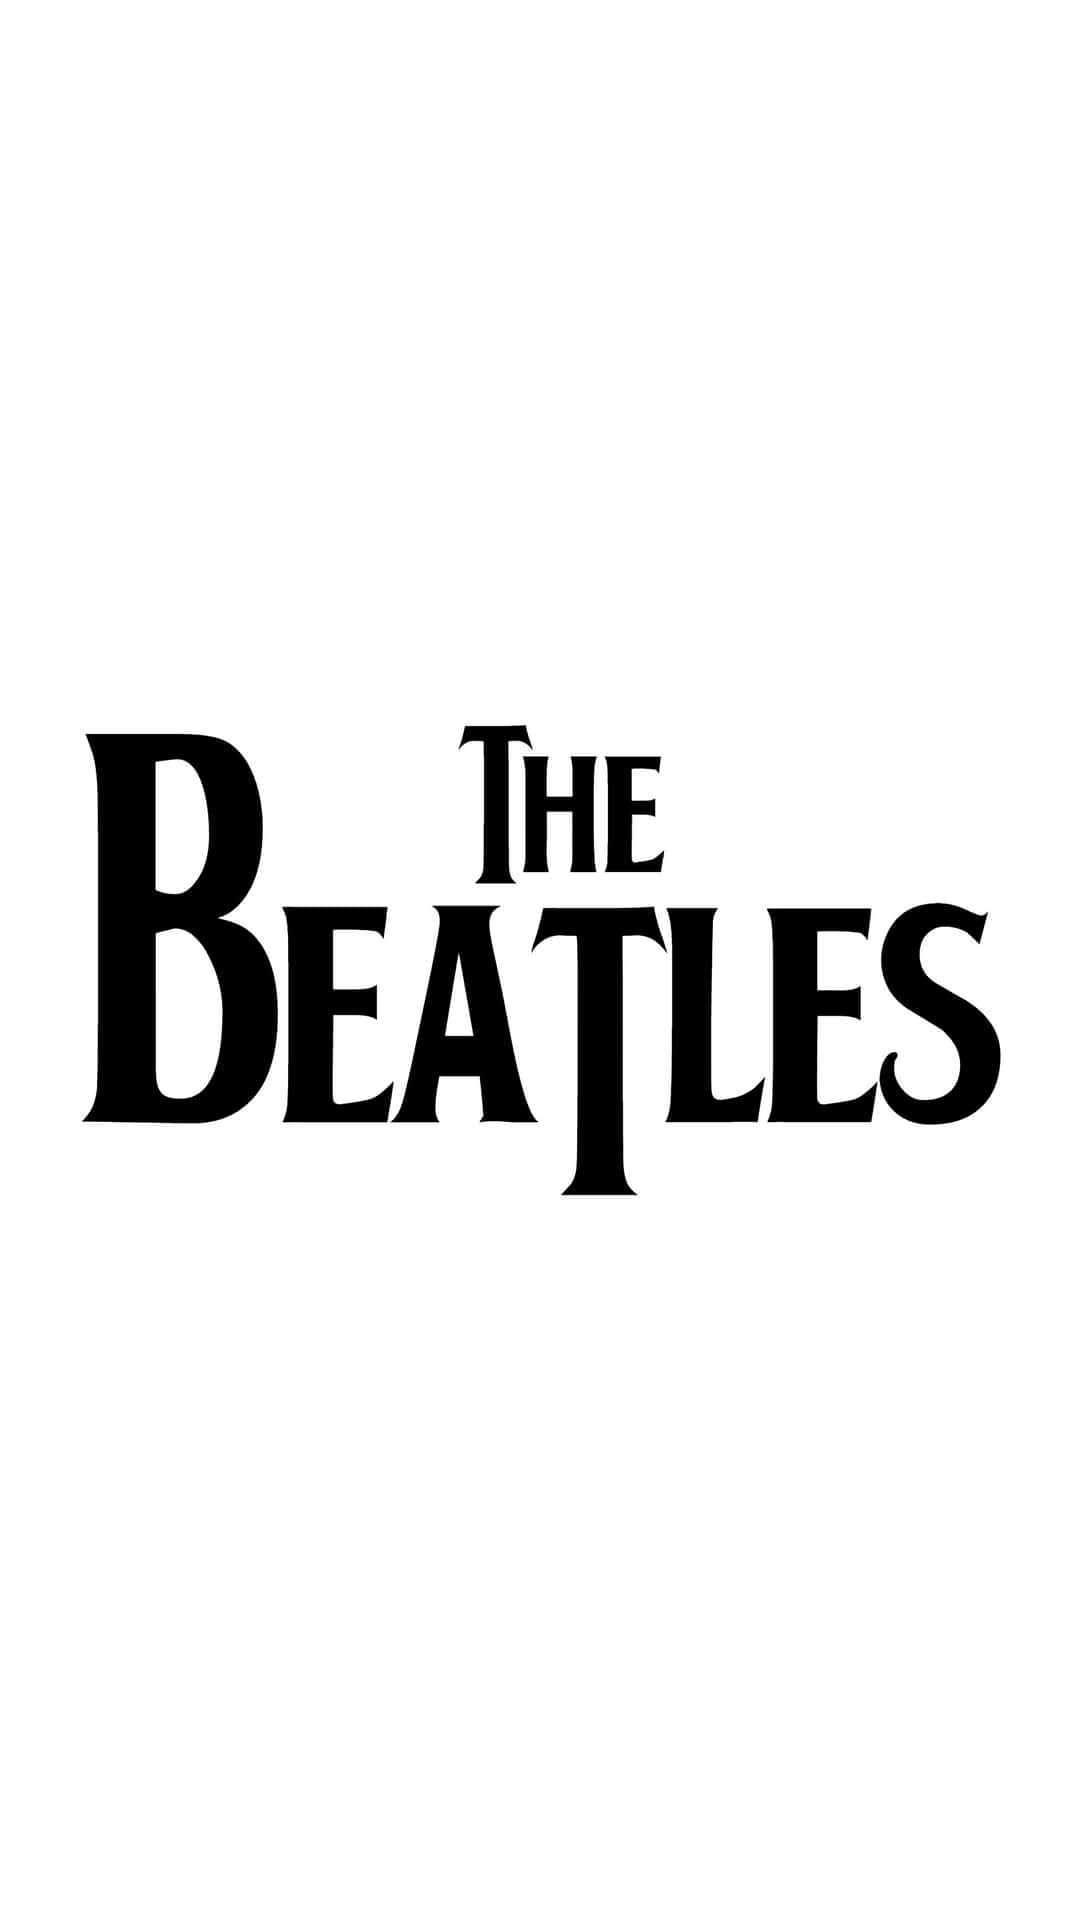 Iconic Beatles Album Cover Art